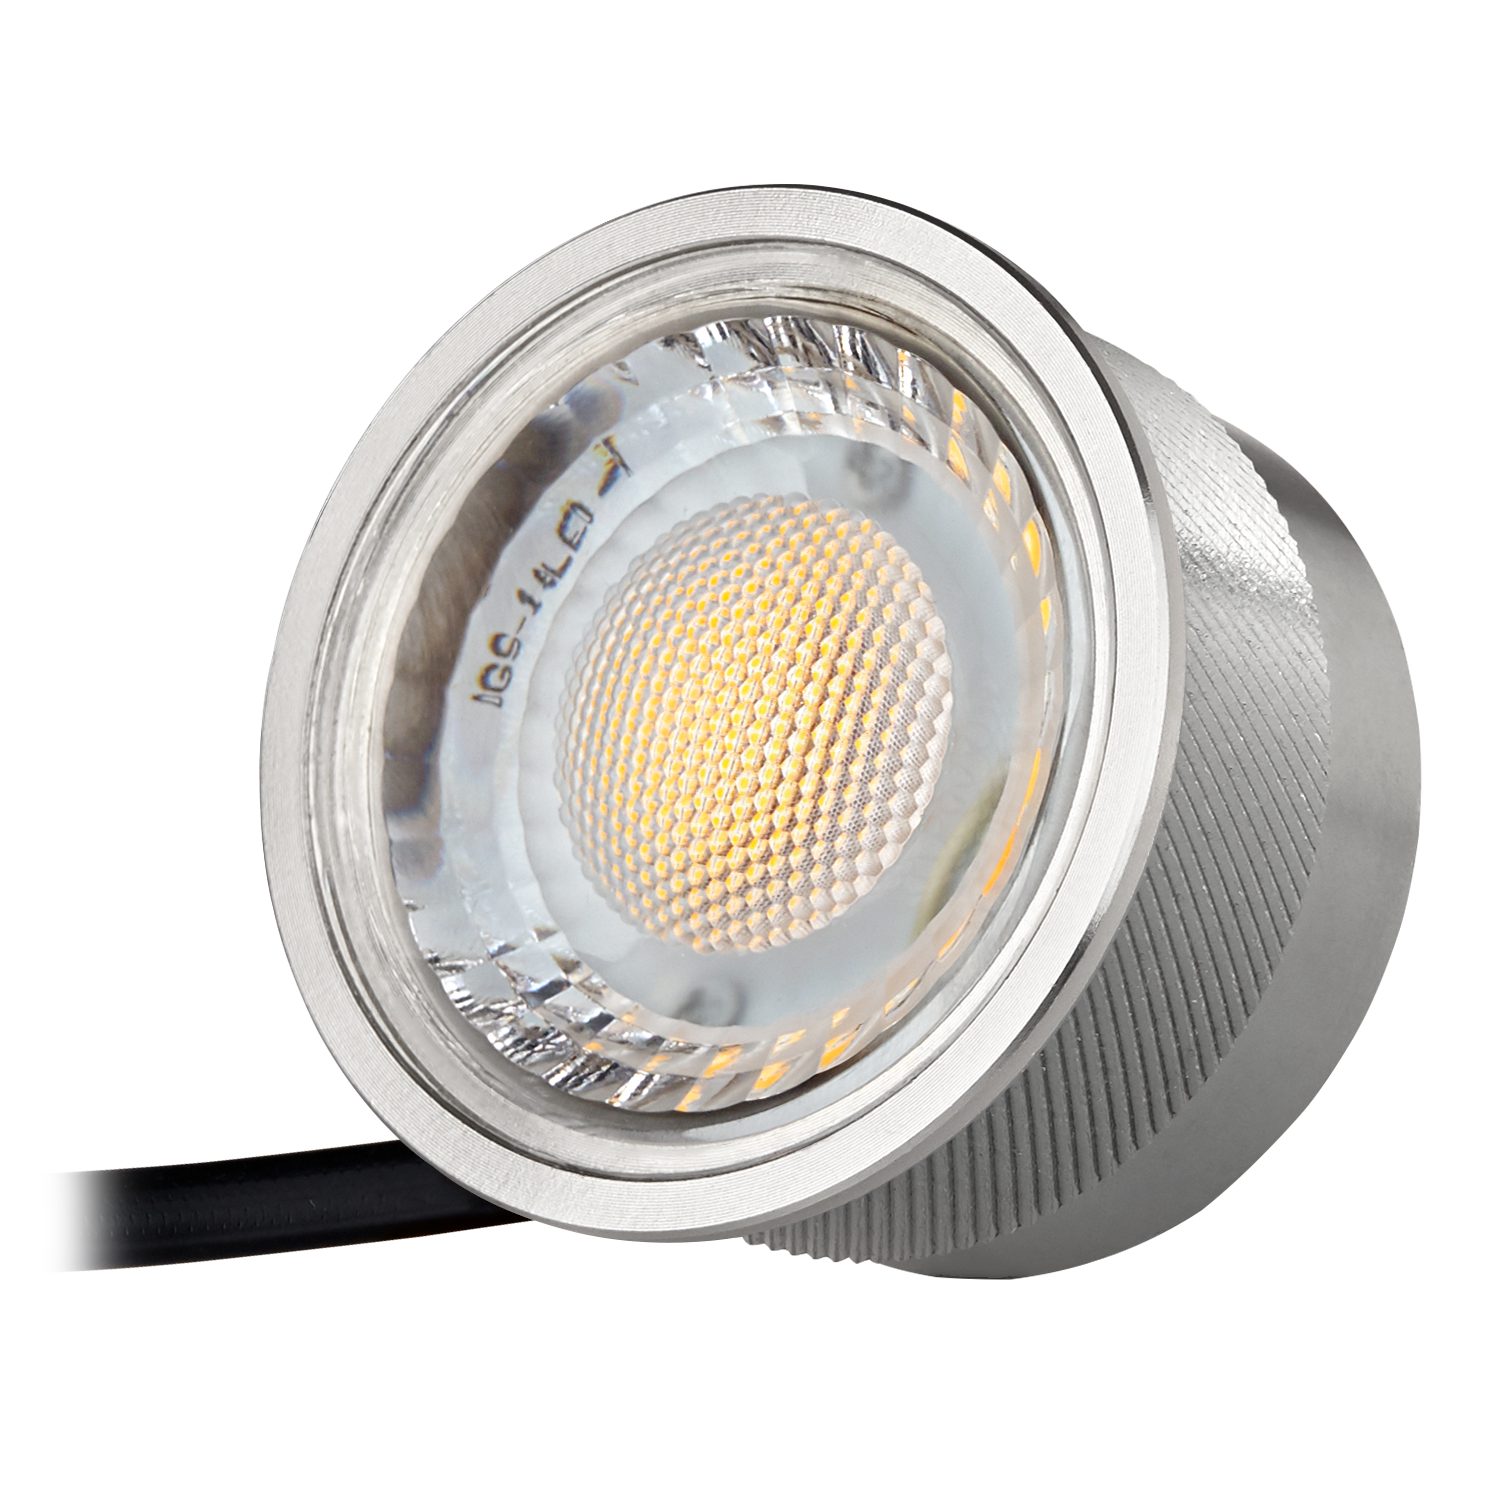 LEDANDO LED Einbaustrahler 10er LED mit 5W Set Einbaustrahler in LED extra flach chrom LEDAND von